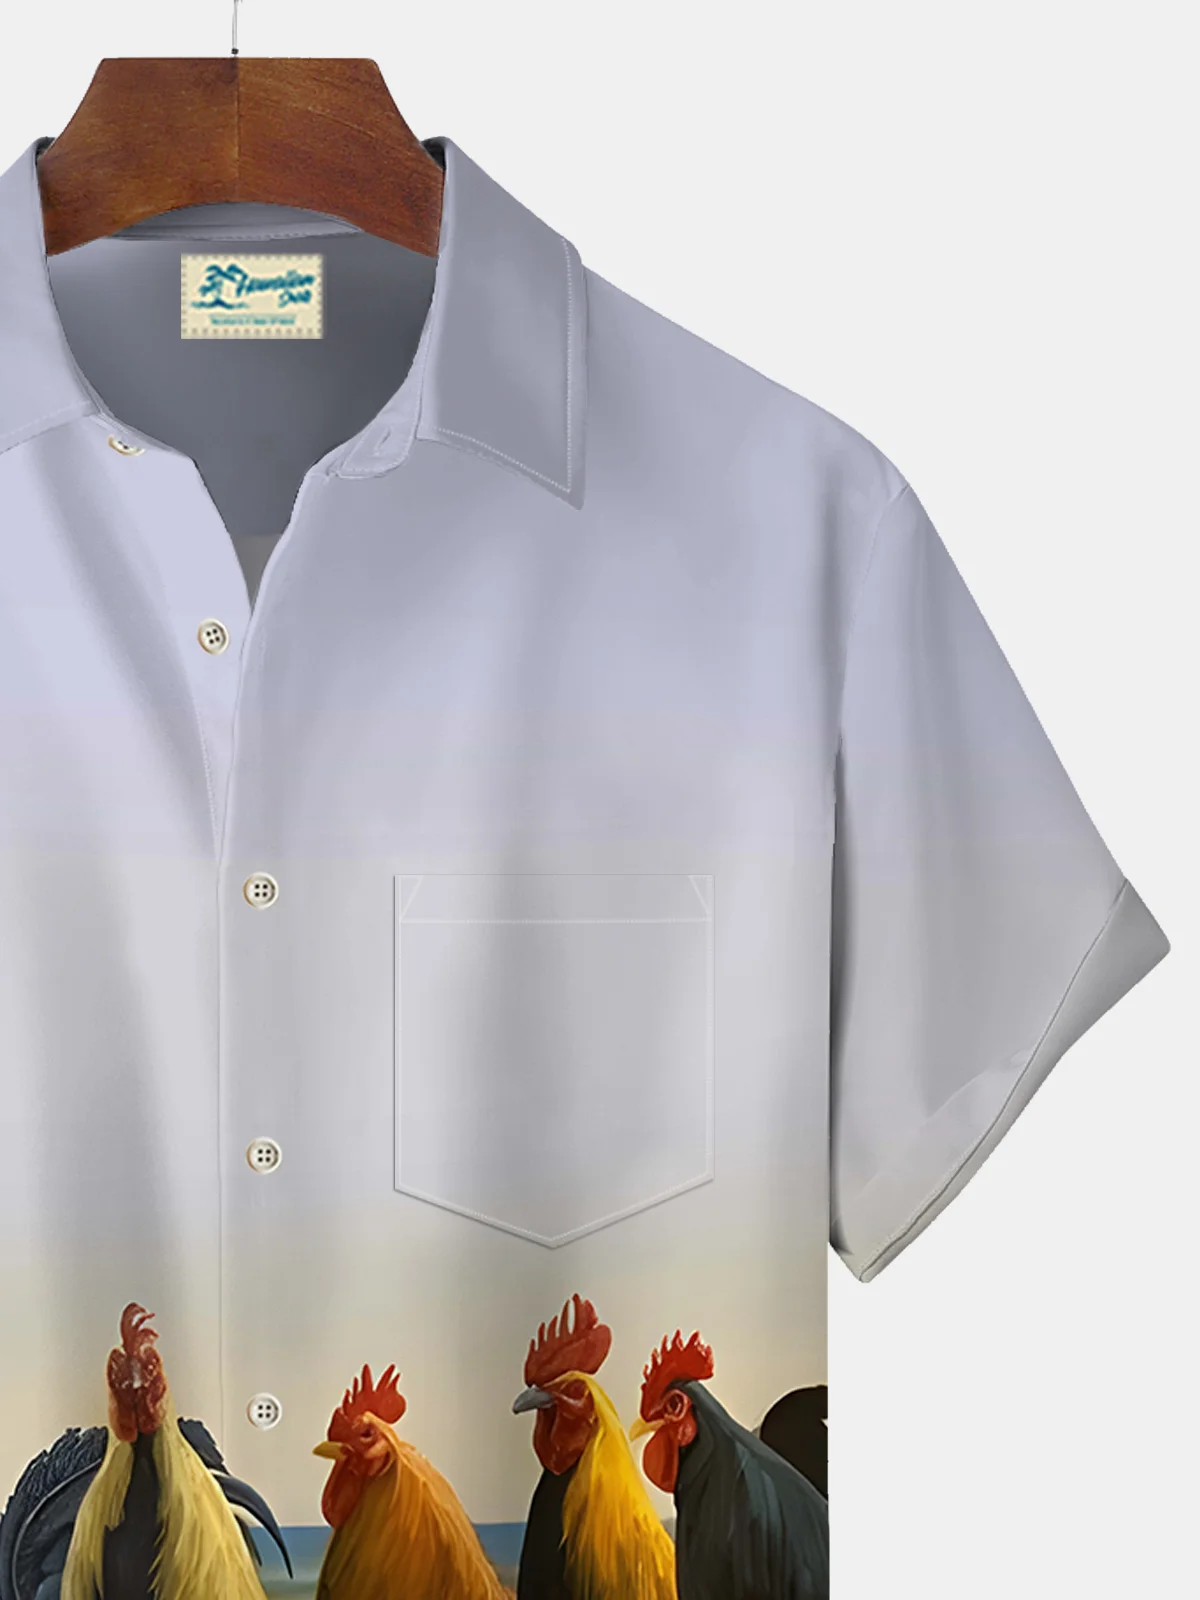 Royaura Rooster Print Beach Men's Hawaiian Oversized Short Sleeve Shirt with Pockets